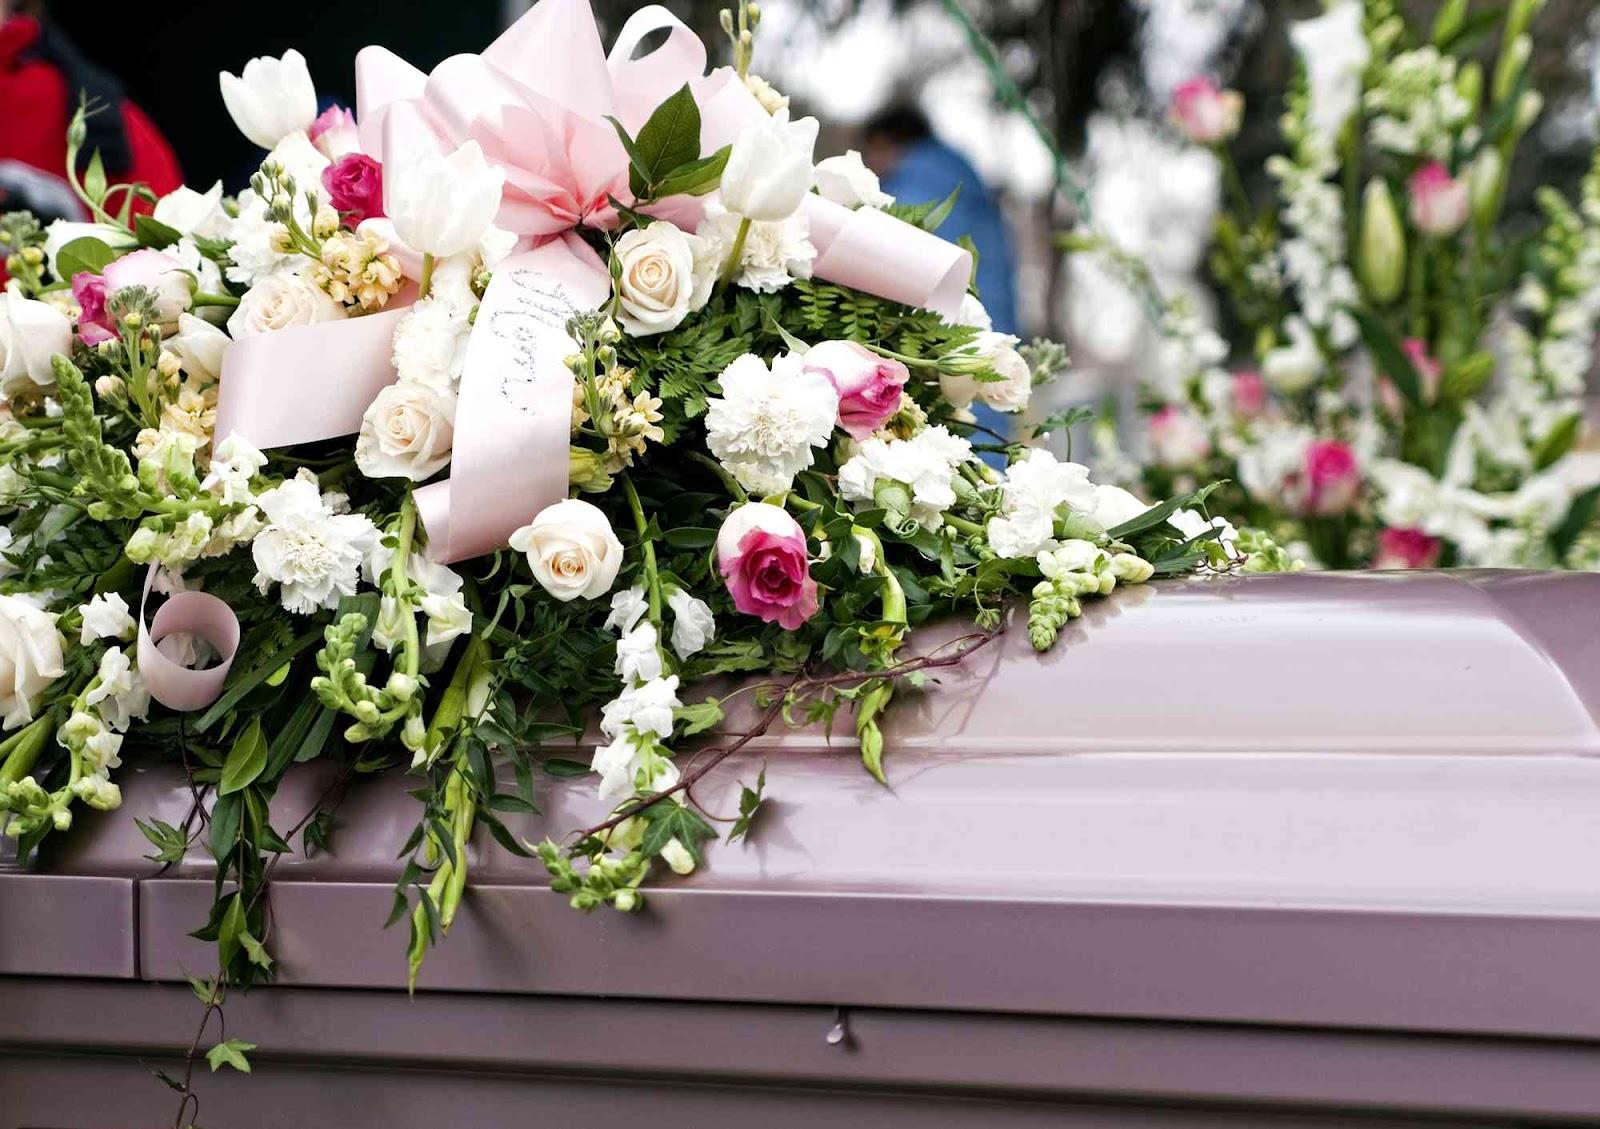 Popular Funeral Flower Arrangements